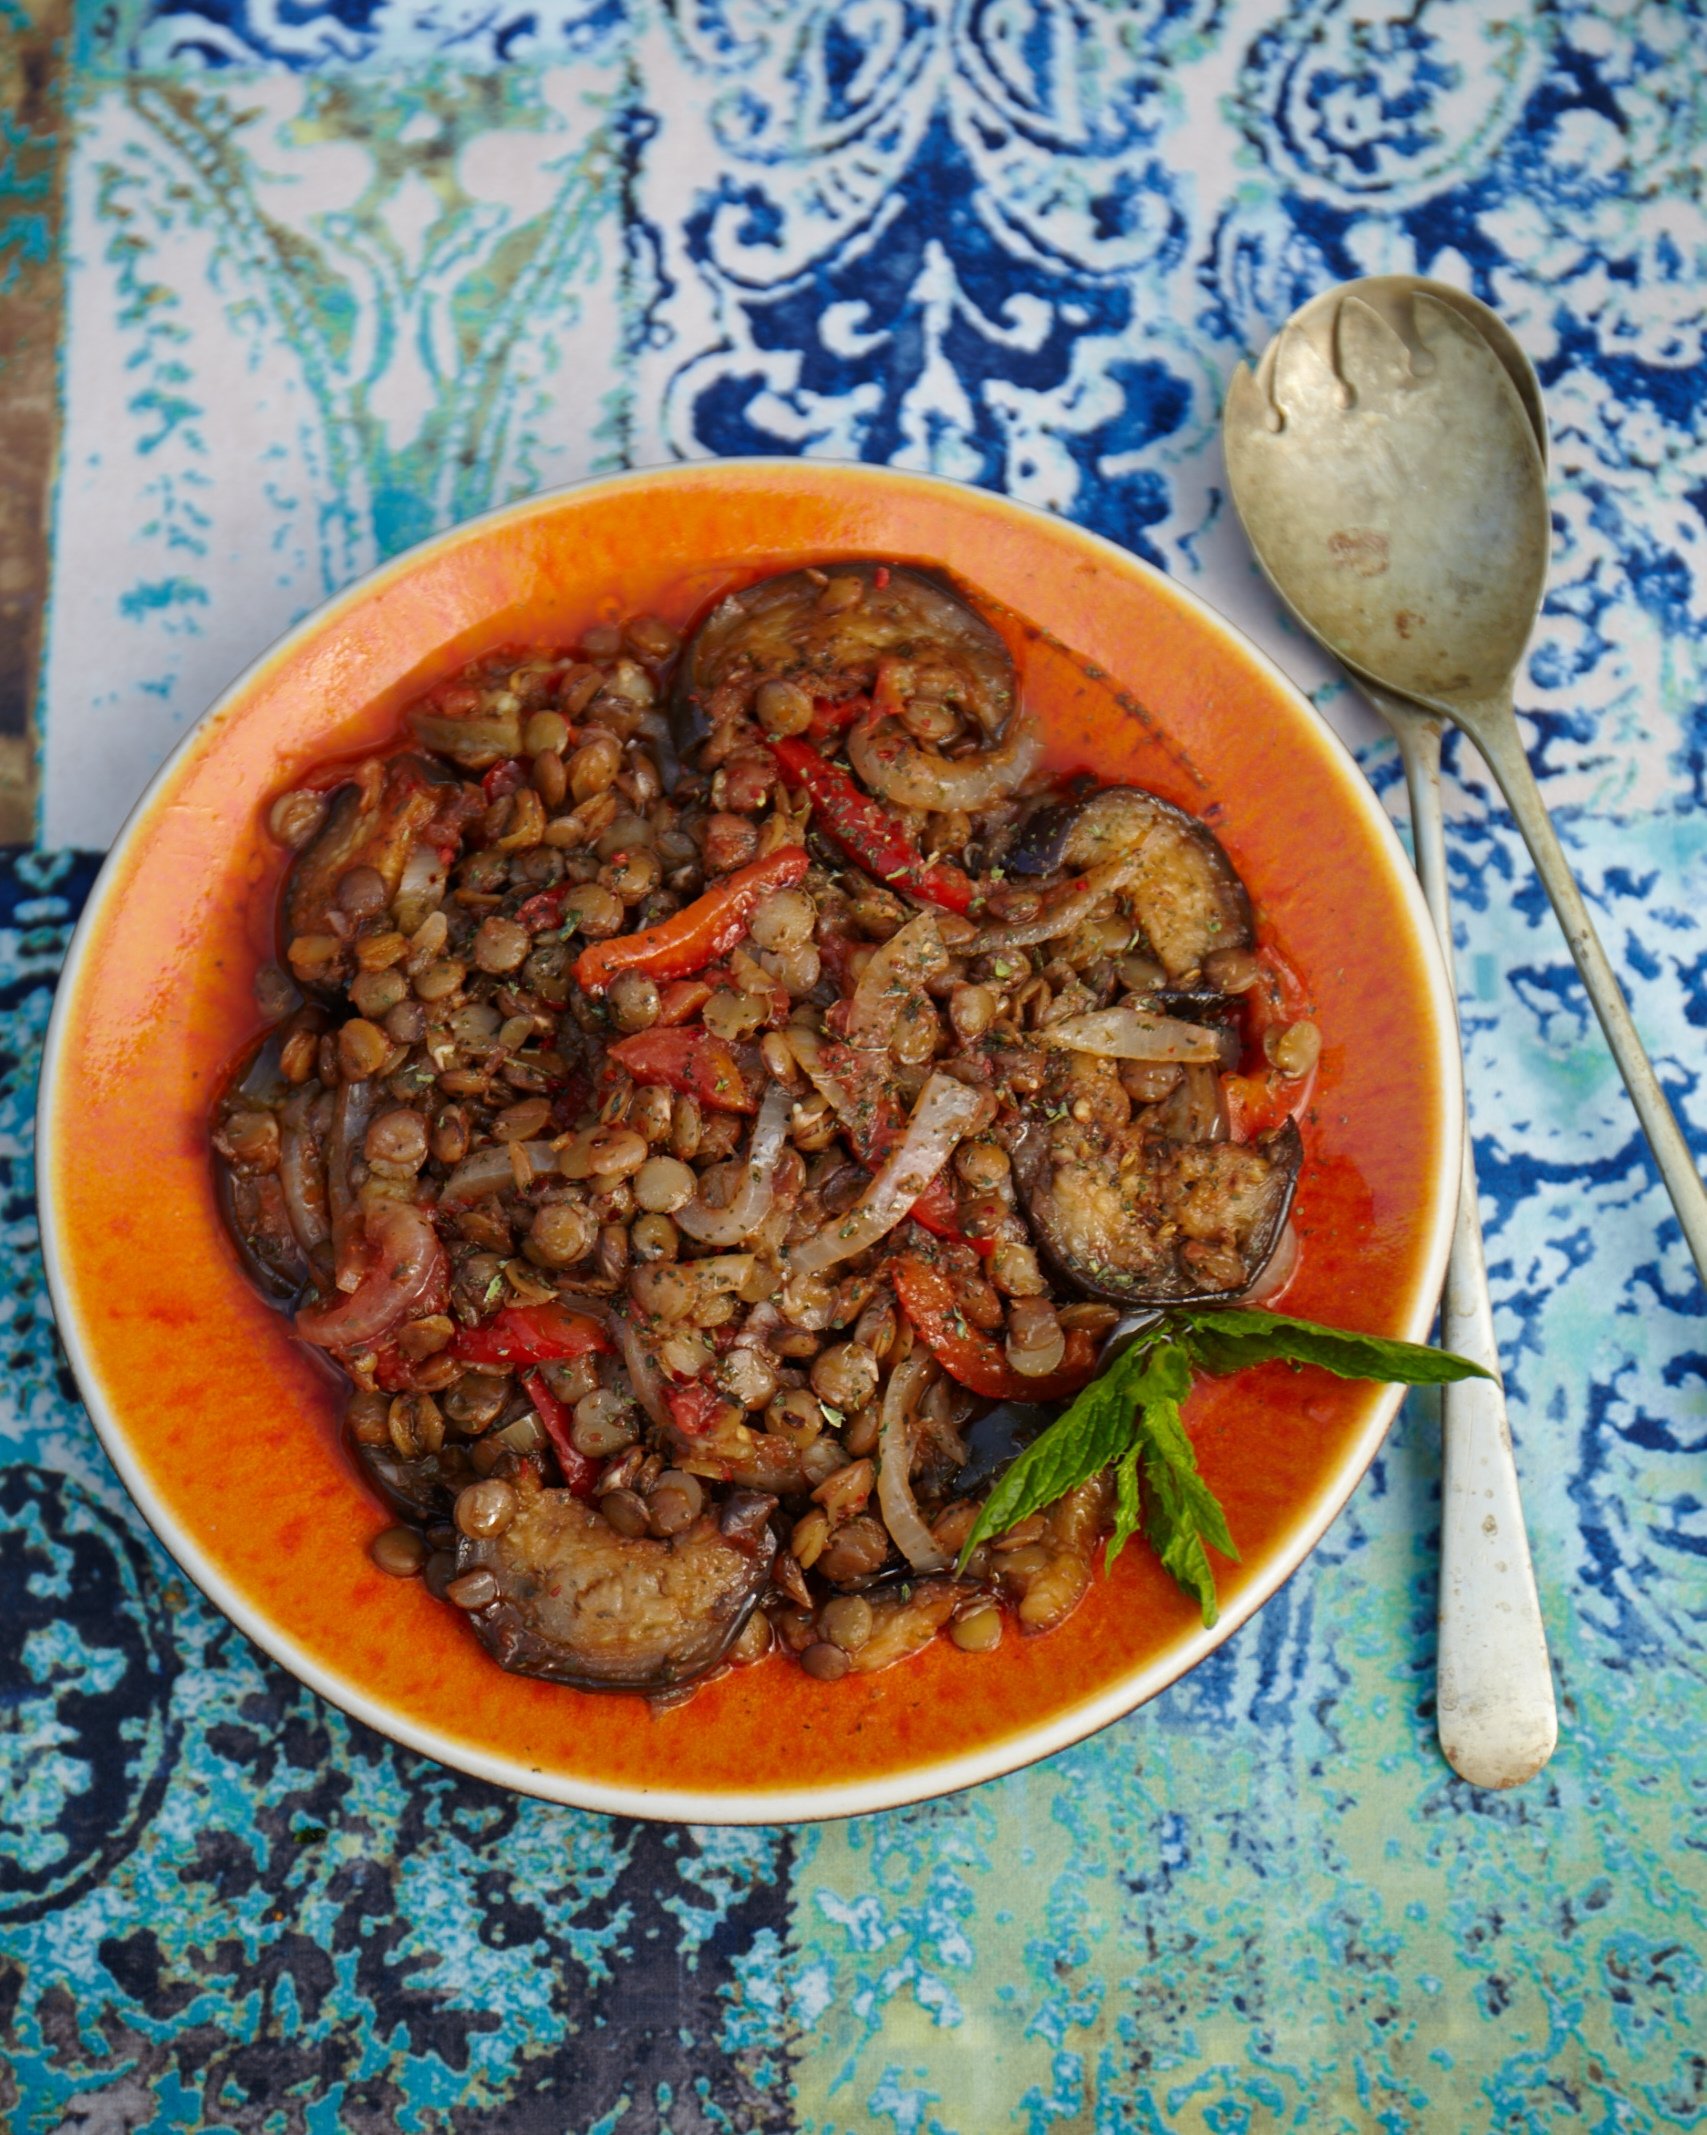 Mercimekli mualla, a dish of aubergines, lentils and peppers, is one of the many recipes in Turkish expat Özlem Warren’s cookbook. (Photo courtesy of Özlem Warren)